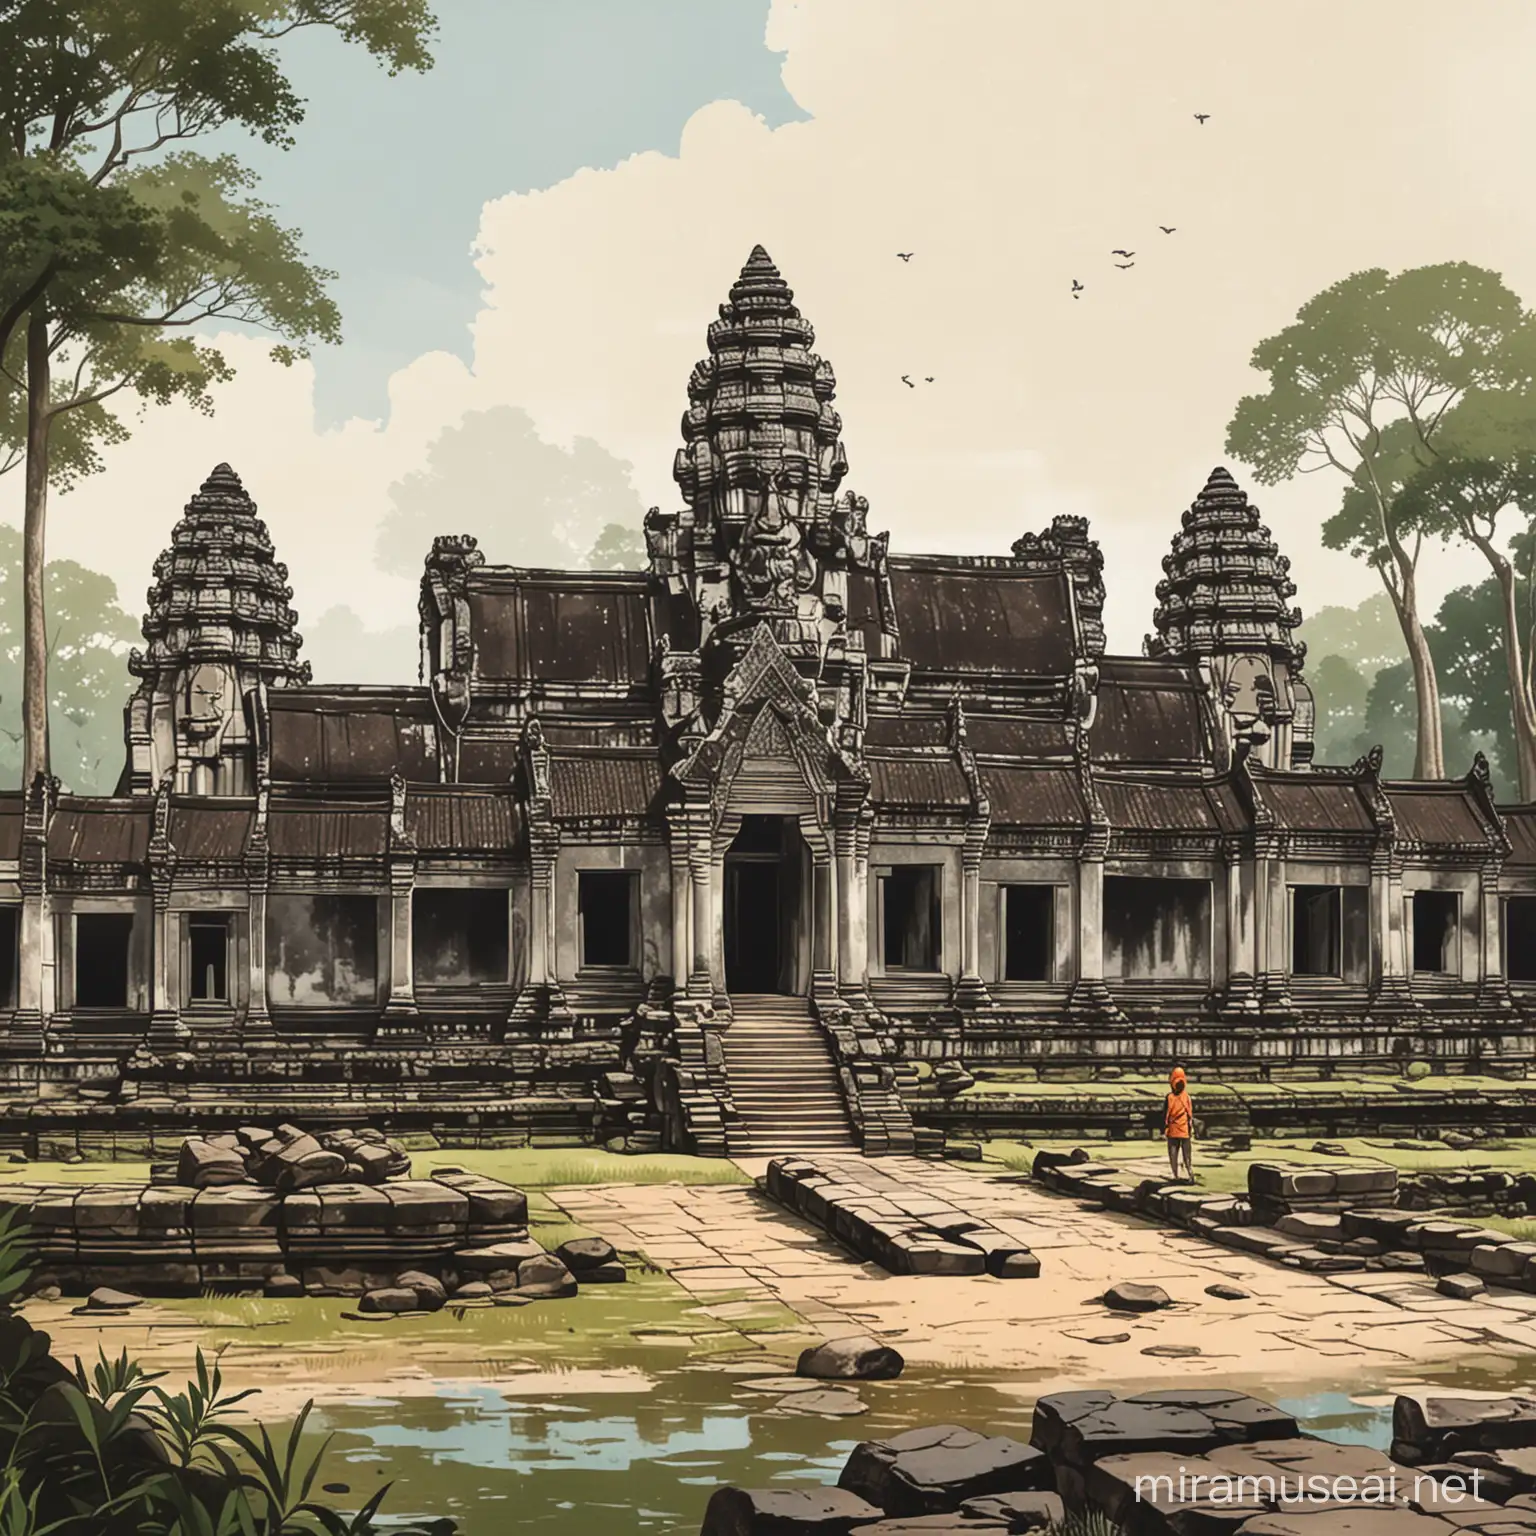 Stunning Handdrawn Illustration of Angkor Wat Temple